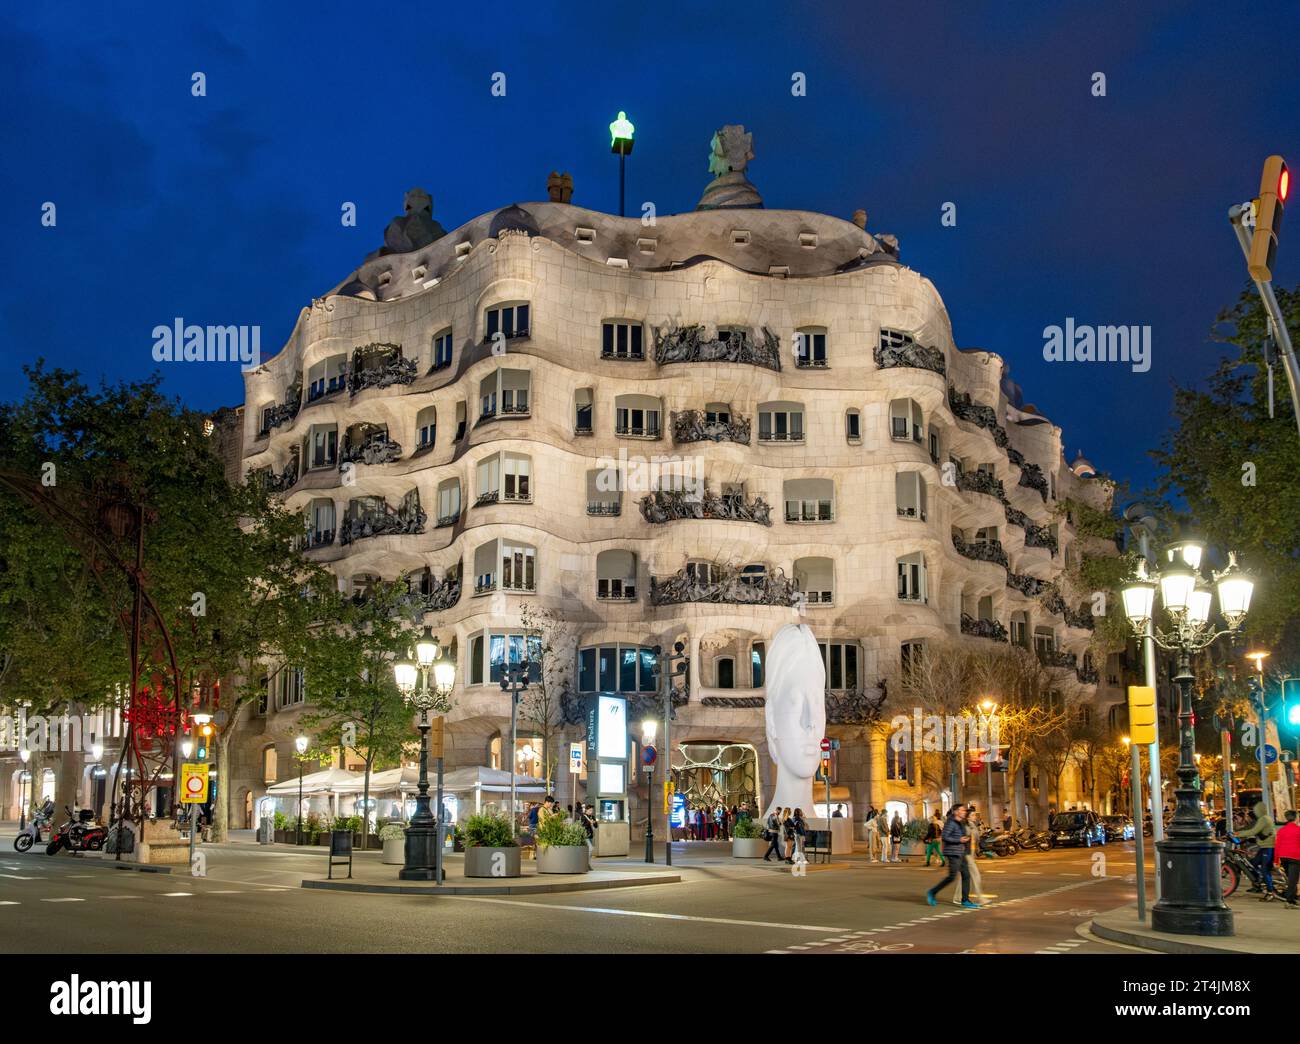 Casa Mila - La Pedrera at night, Barcelona, Spain Stock Photo